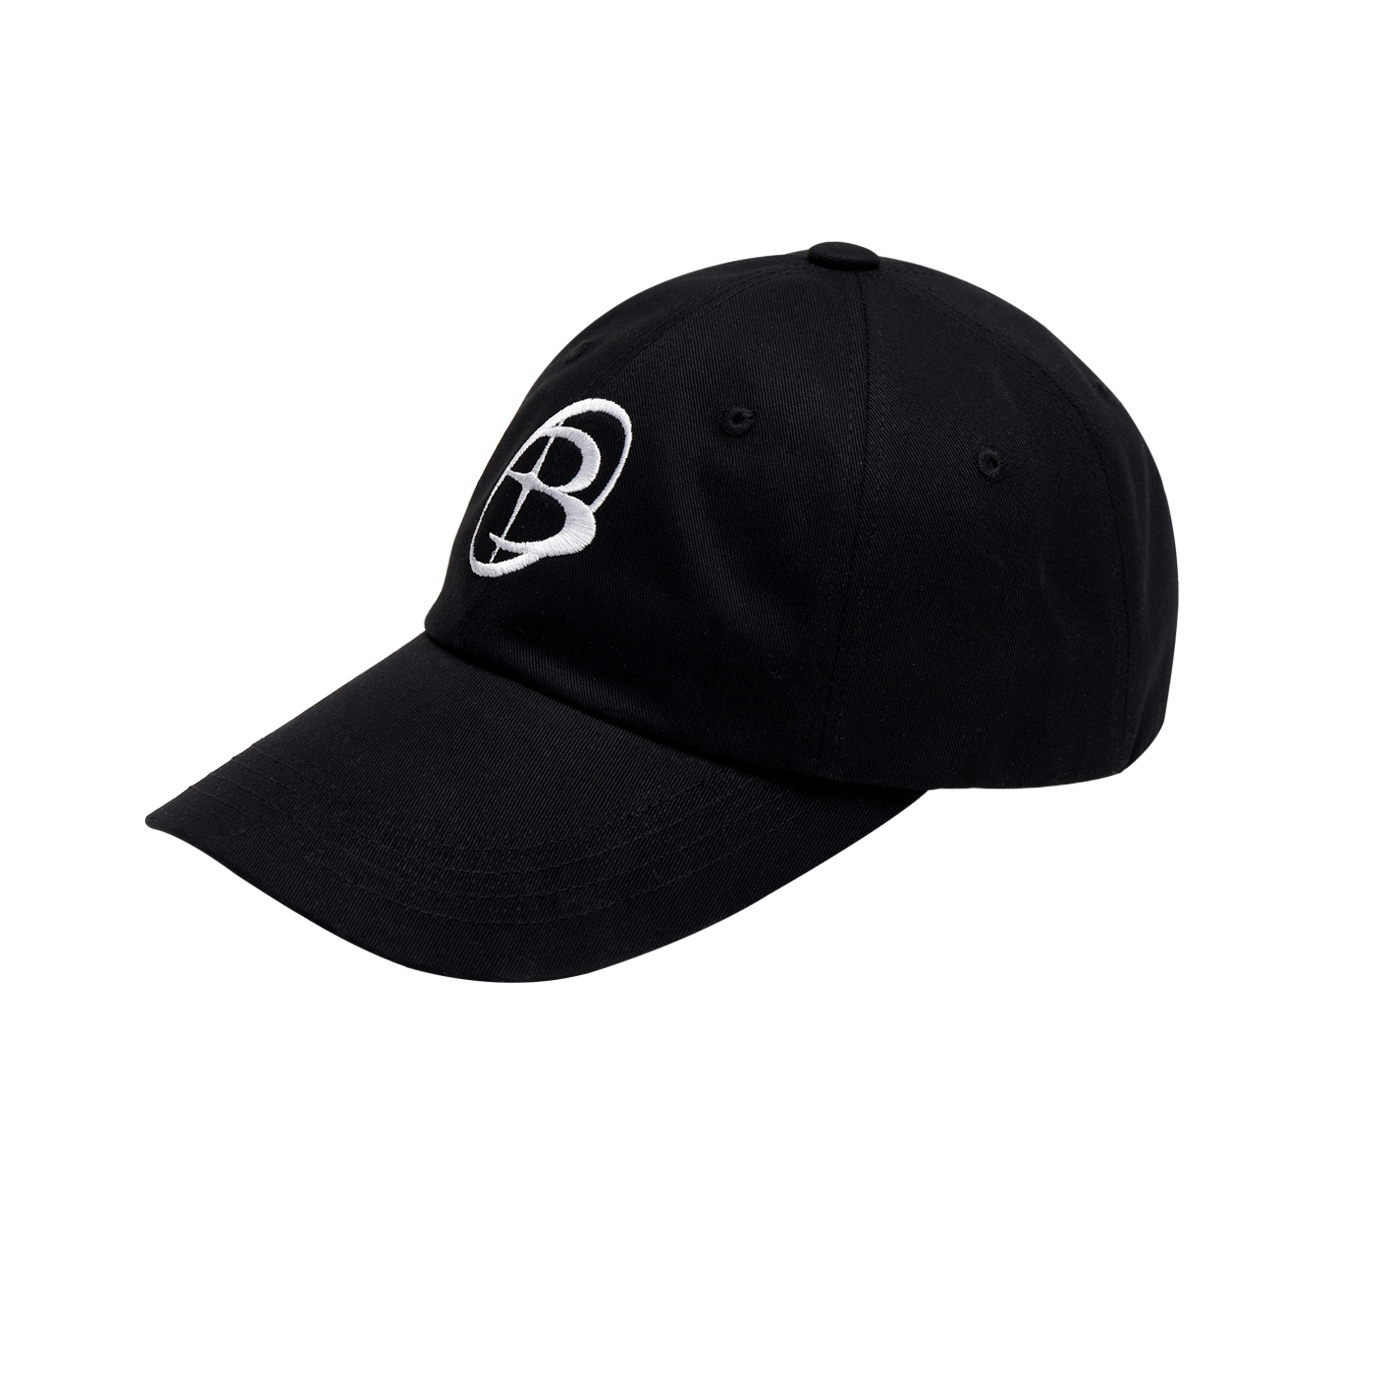 Logo symbol ball cap - black